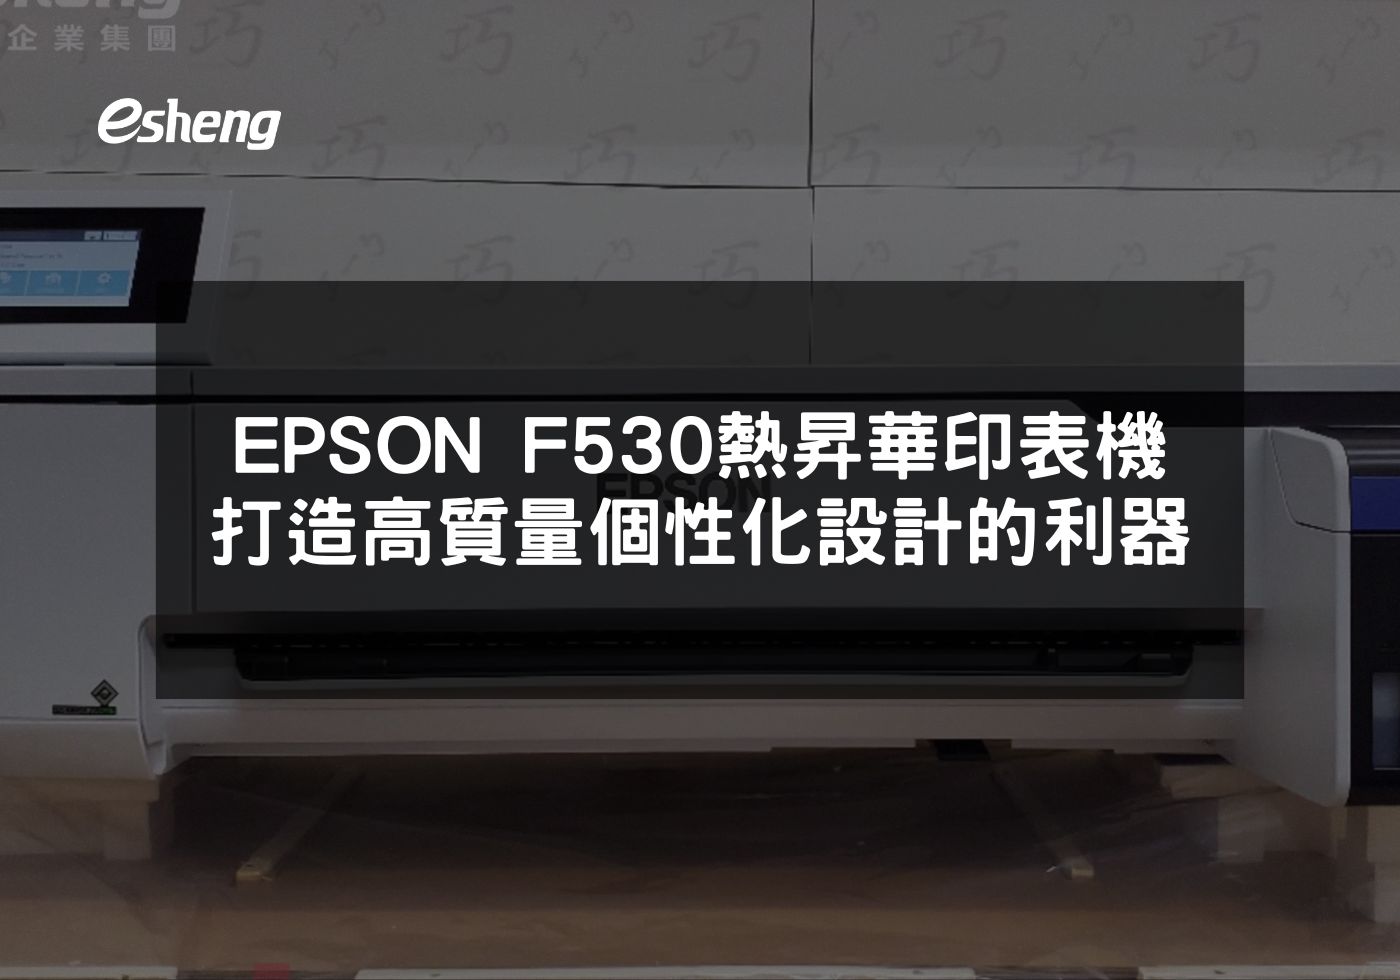 EPSON F530專業設計支持優化印刷效果